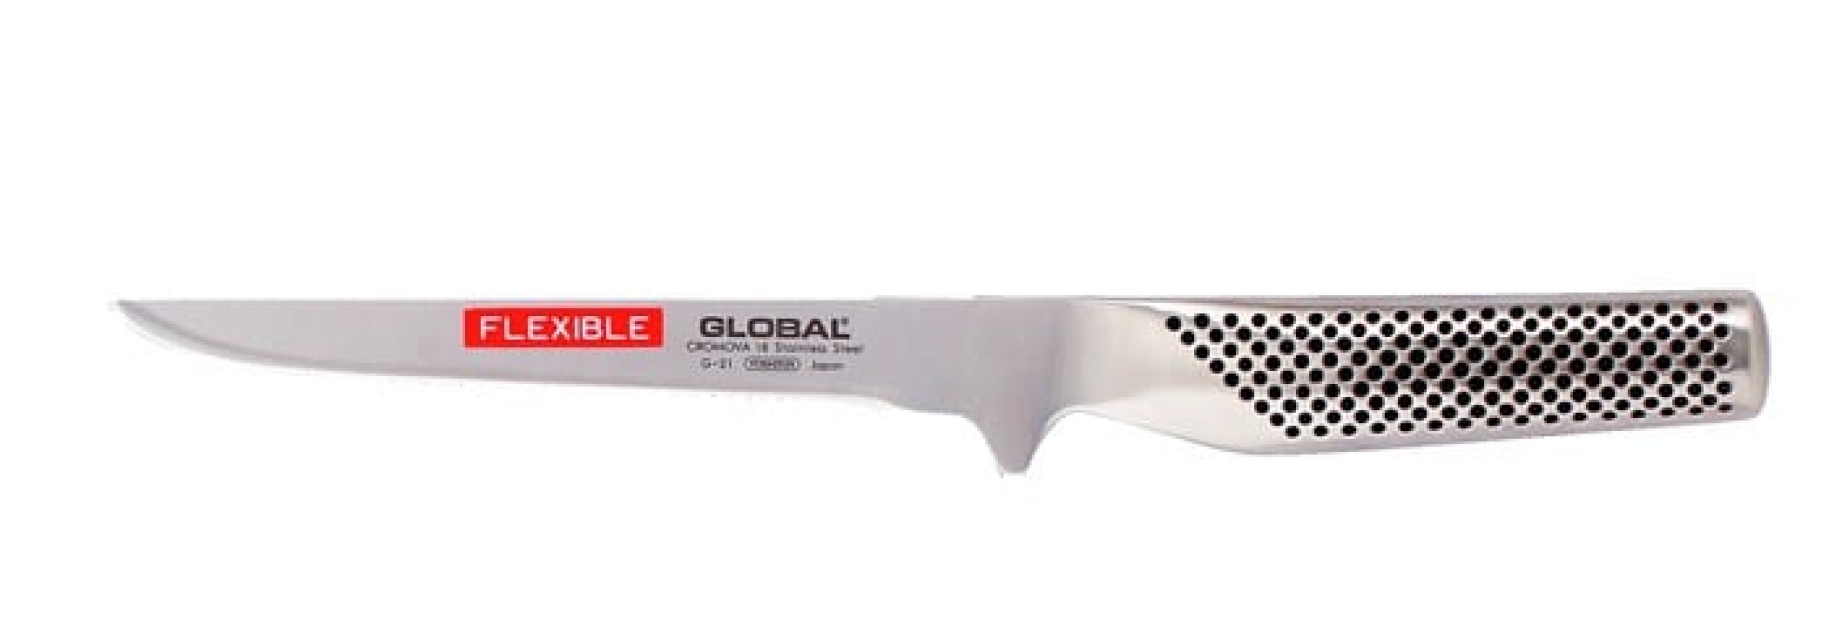 Filékniv G-21, 16cm, flexibel - Global